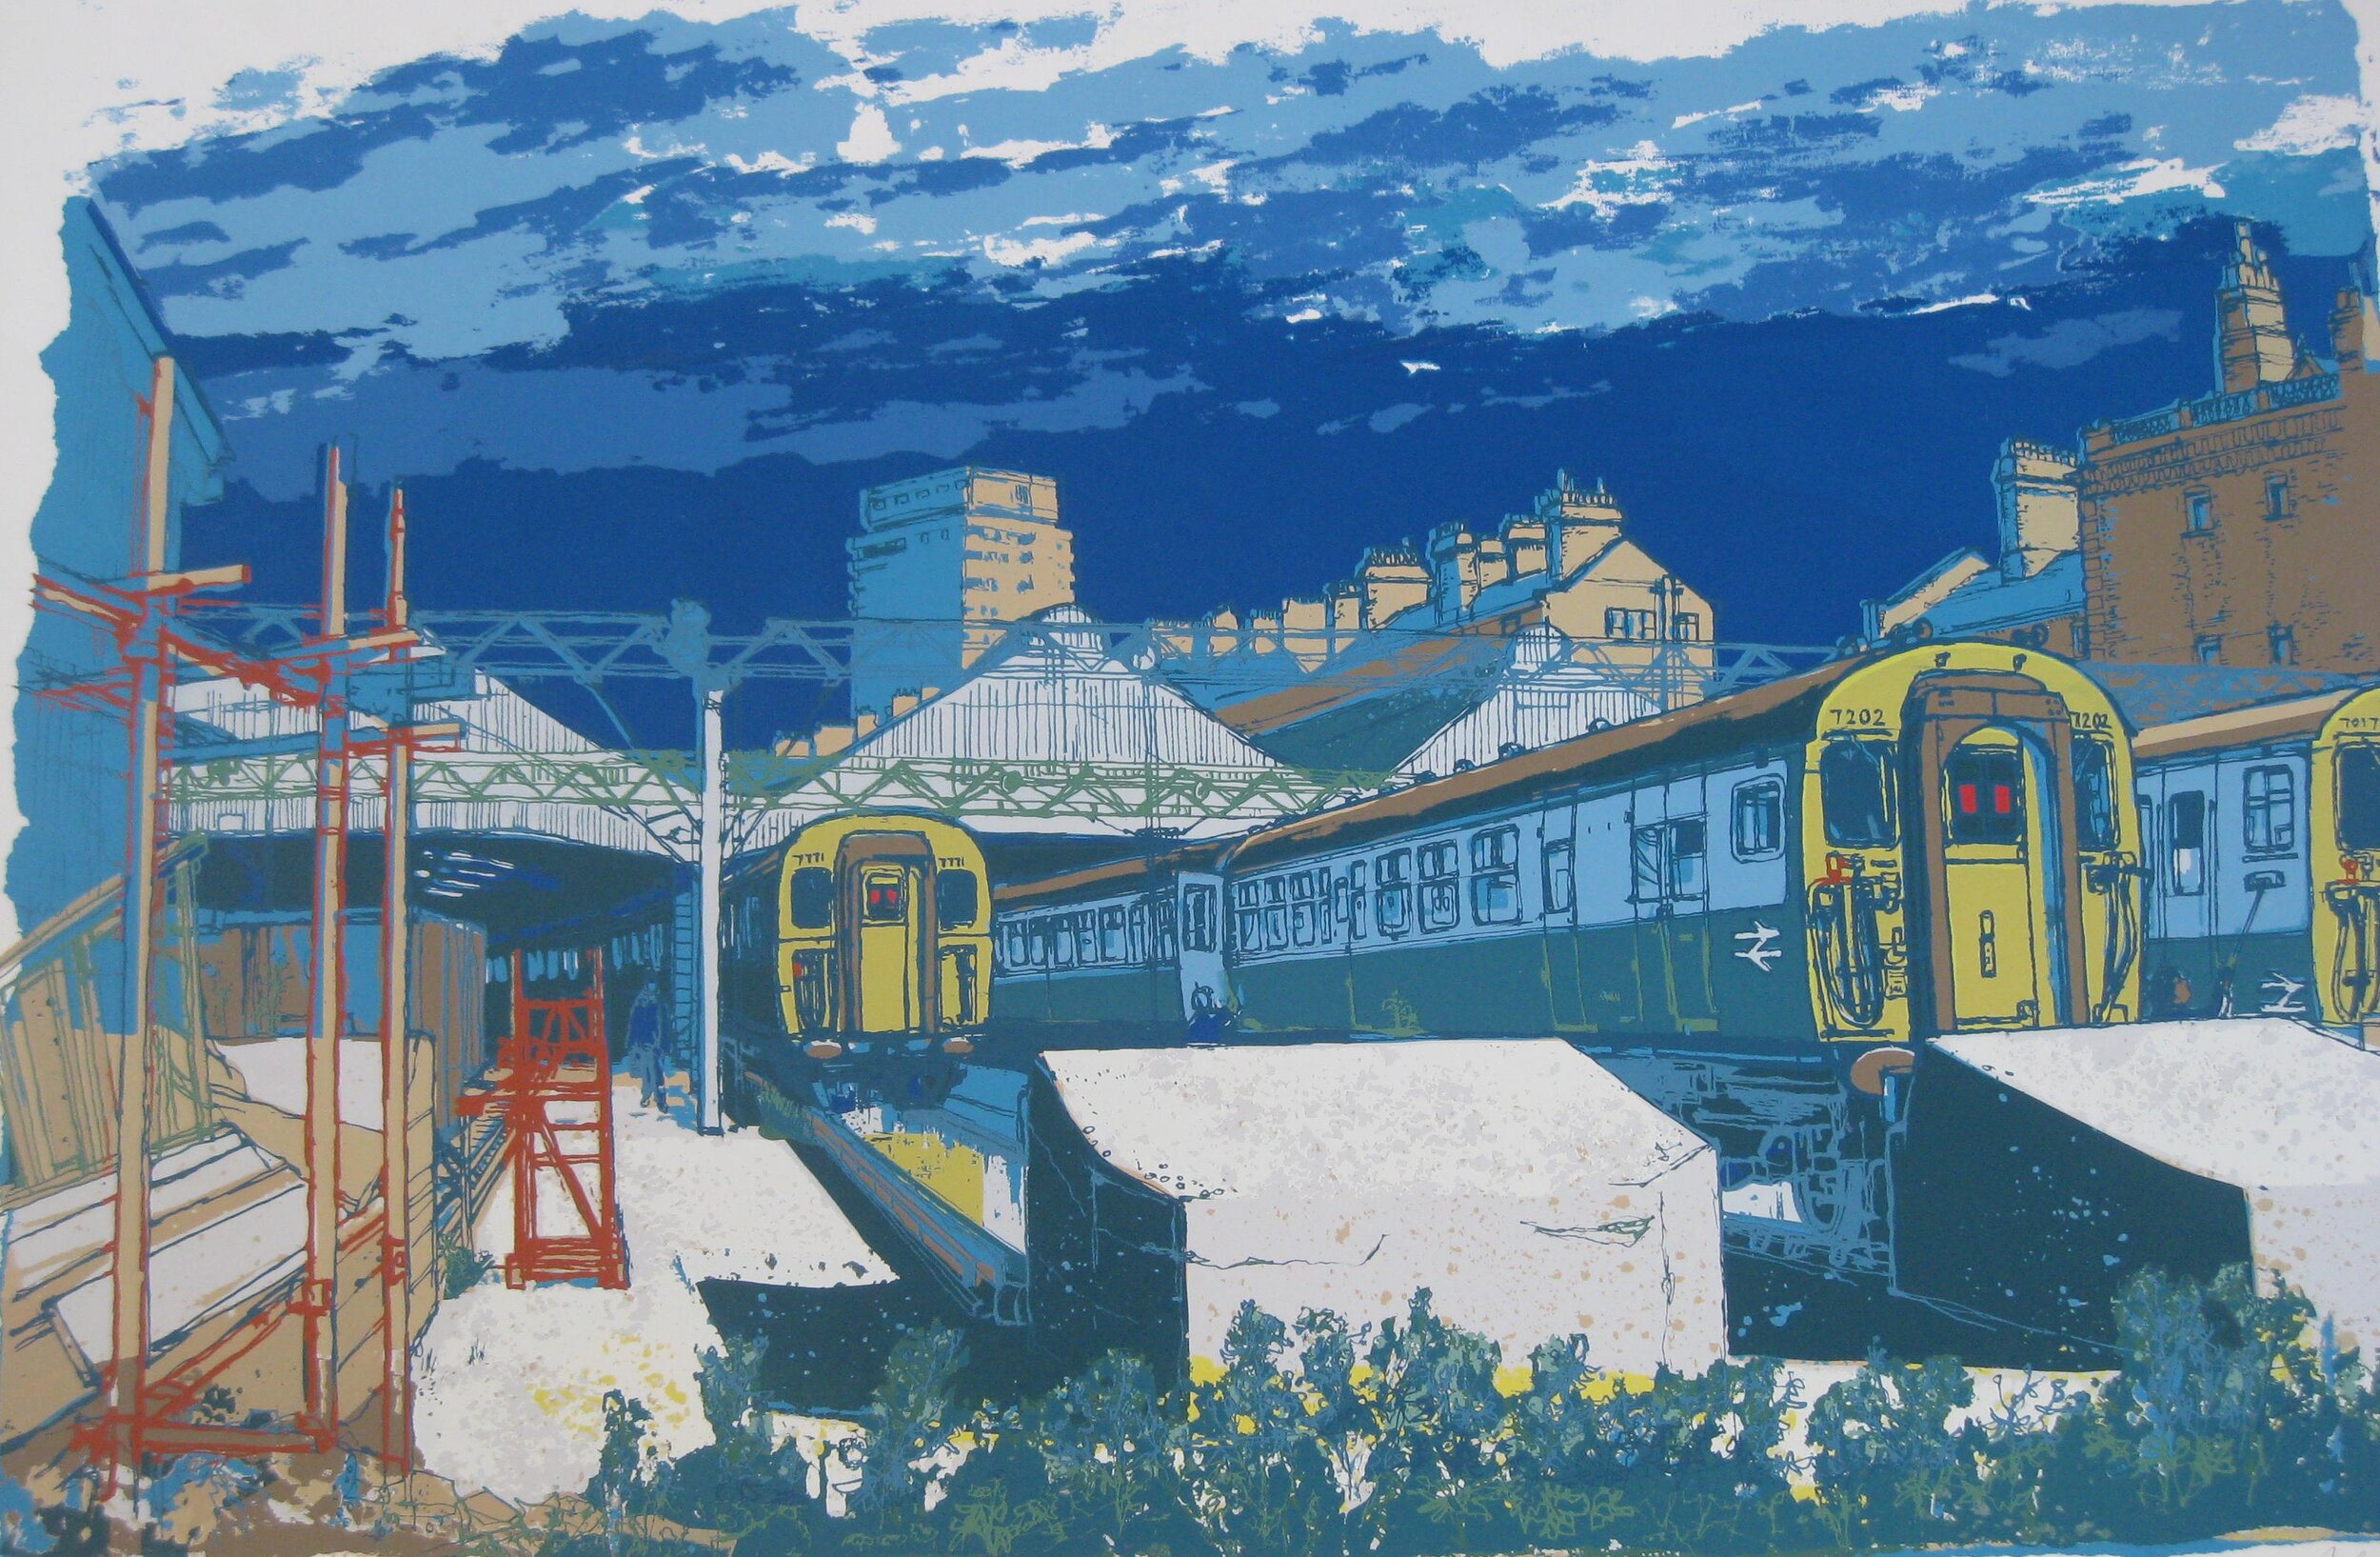 Victoria Railway Depot, Silk Screen Print, 1980